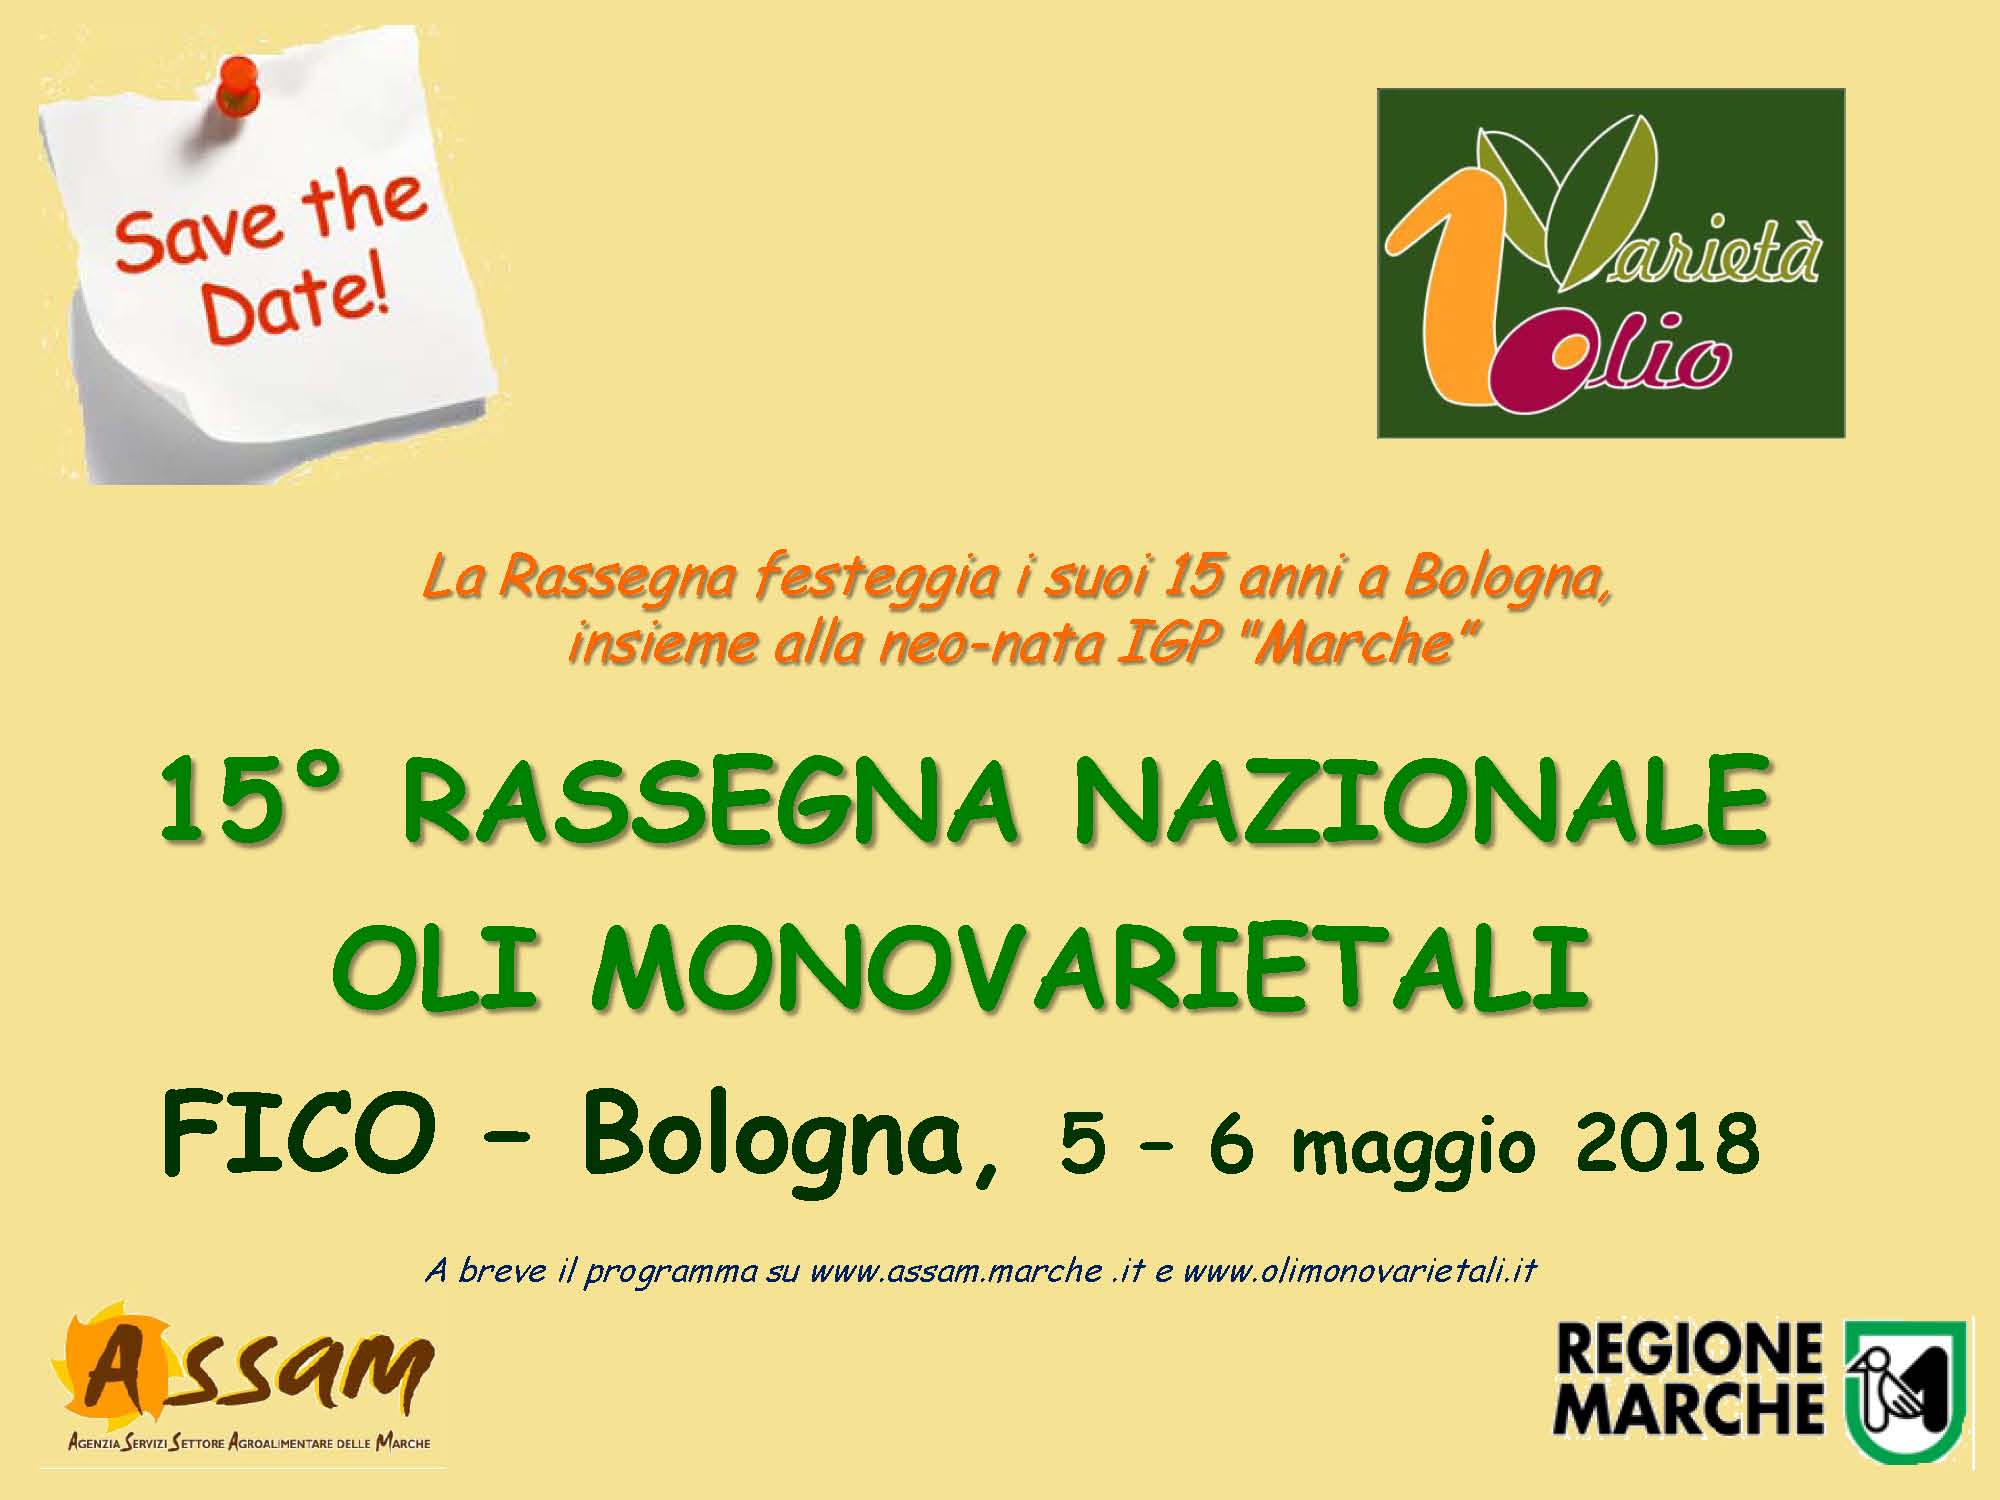 05/05/2018: Save the date - 15° Rassegna Nazionale Oli Monovarietali 2018